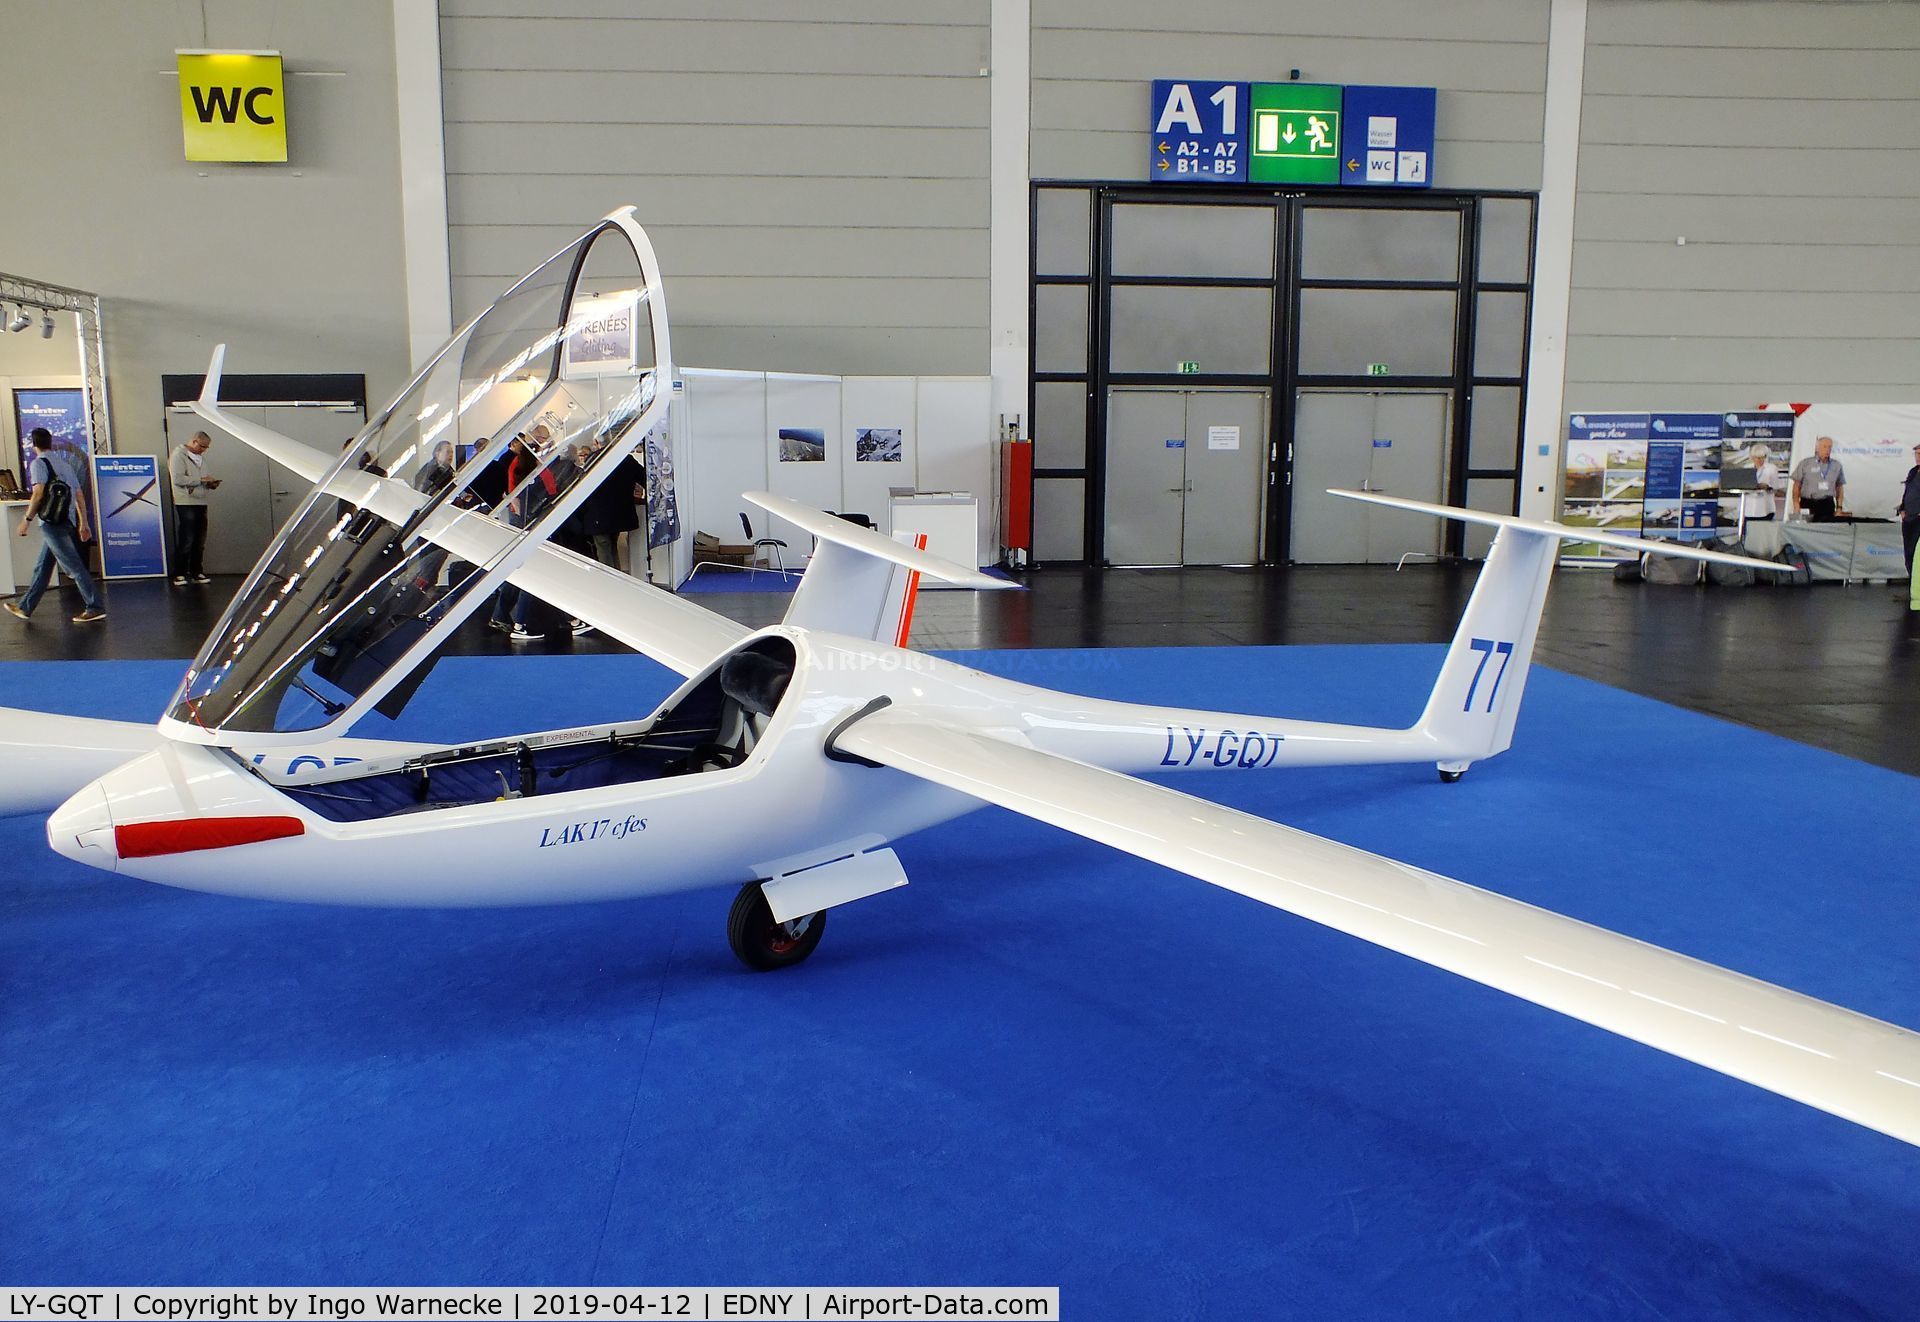 LY-GQT, Sportine Aviacija LAK-17B FES Mini, Sportine Aviacija LAK-17C FES (front electric sustainer) at the AERO 2019, Friedrichshafen